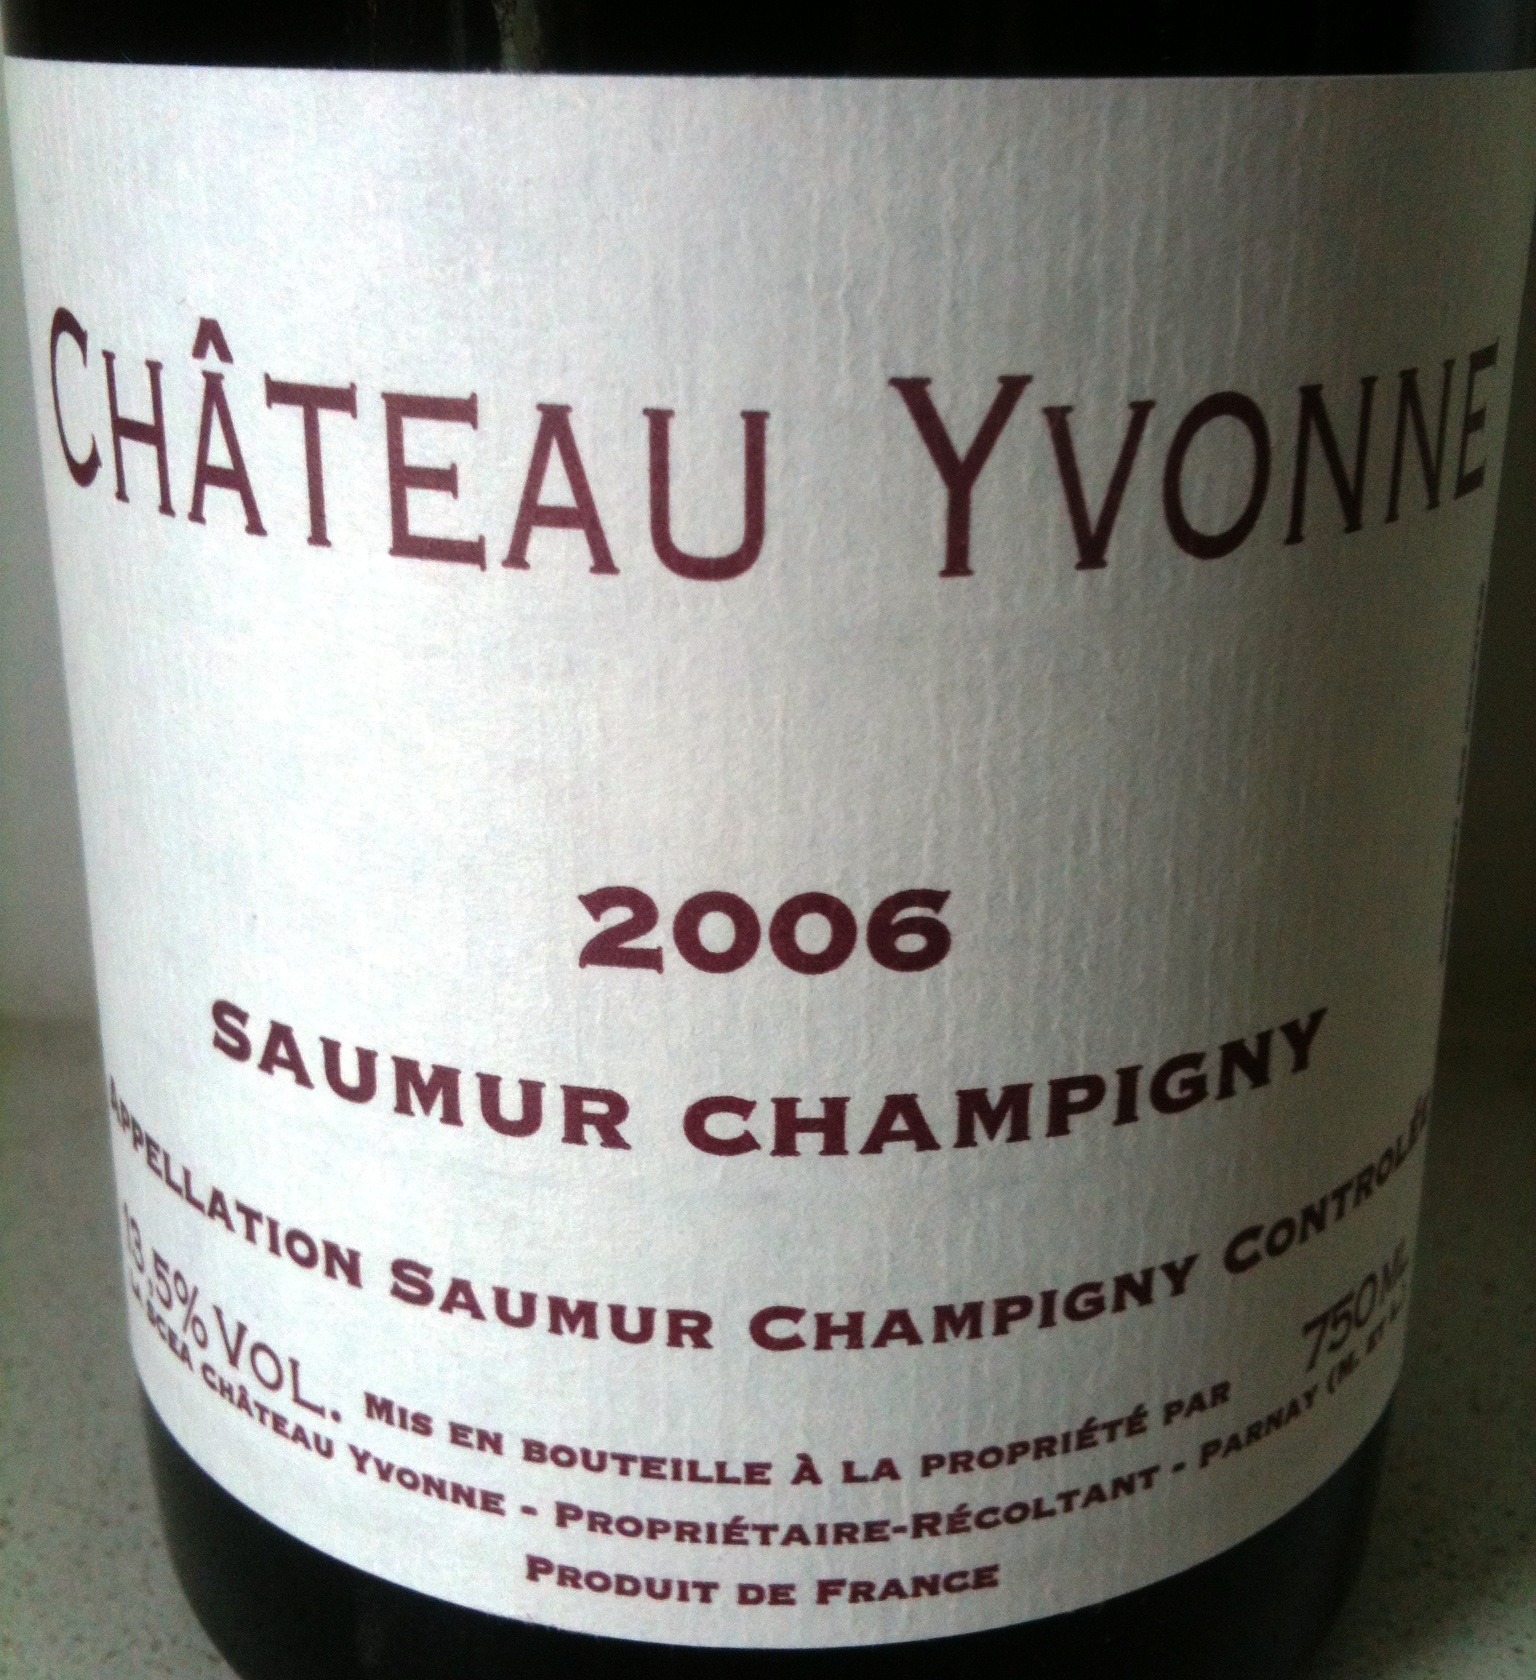 Château Yvonne Saumur-Champigny 2006